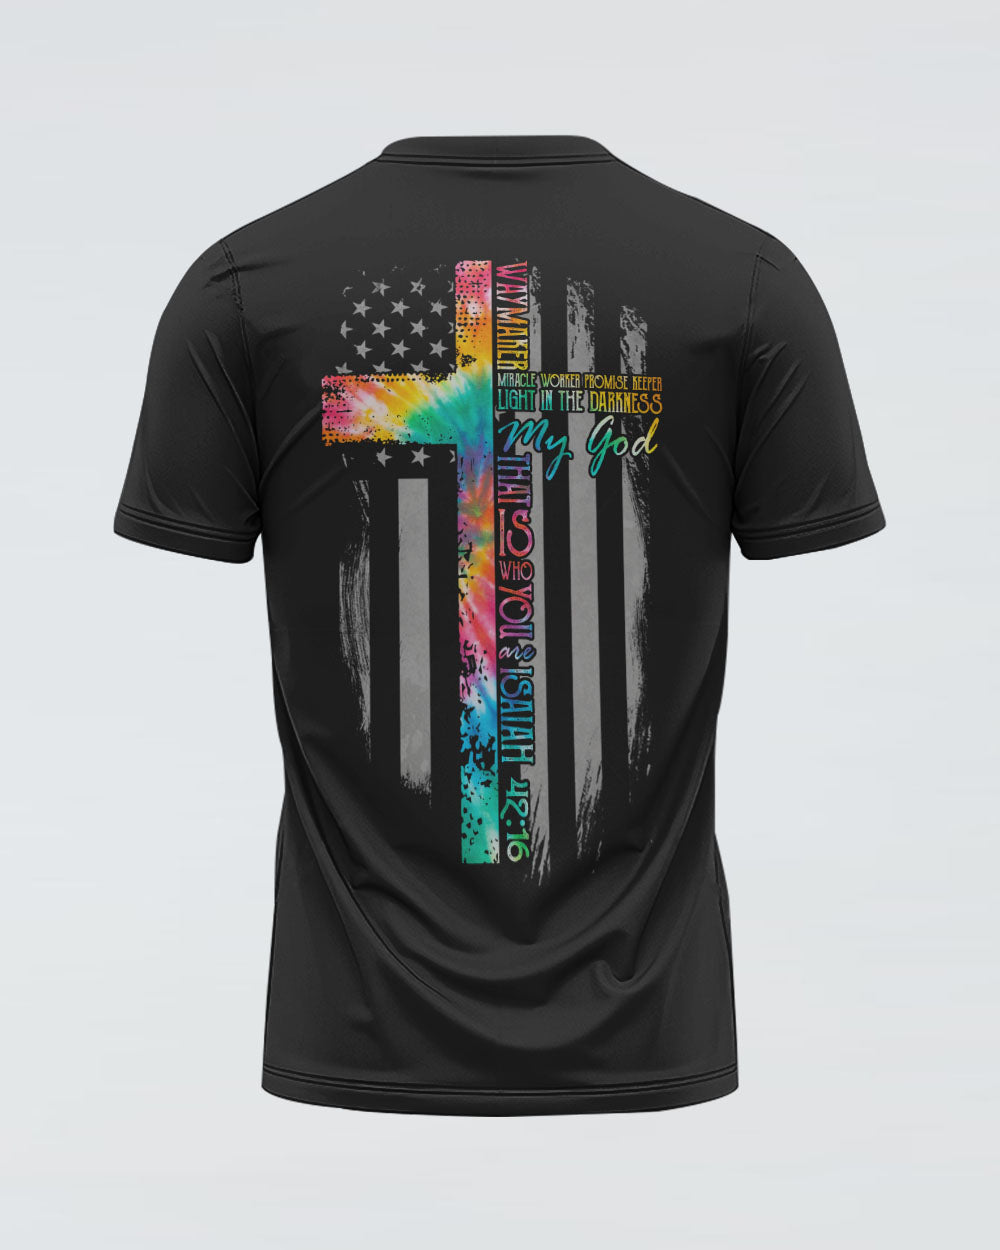 Way Maker Miracle Worker Tie Dye Flag Cross Women's Christian Tshirt